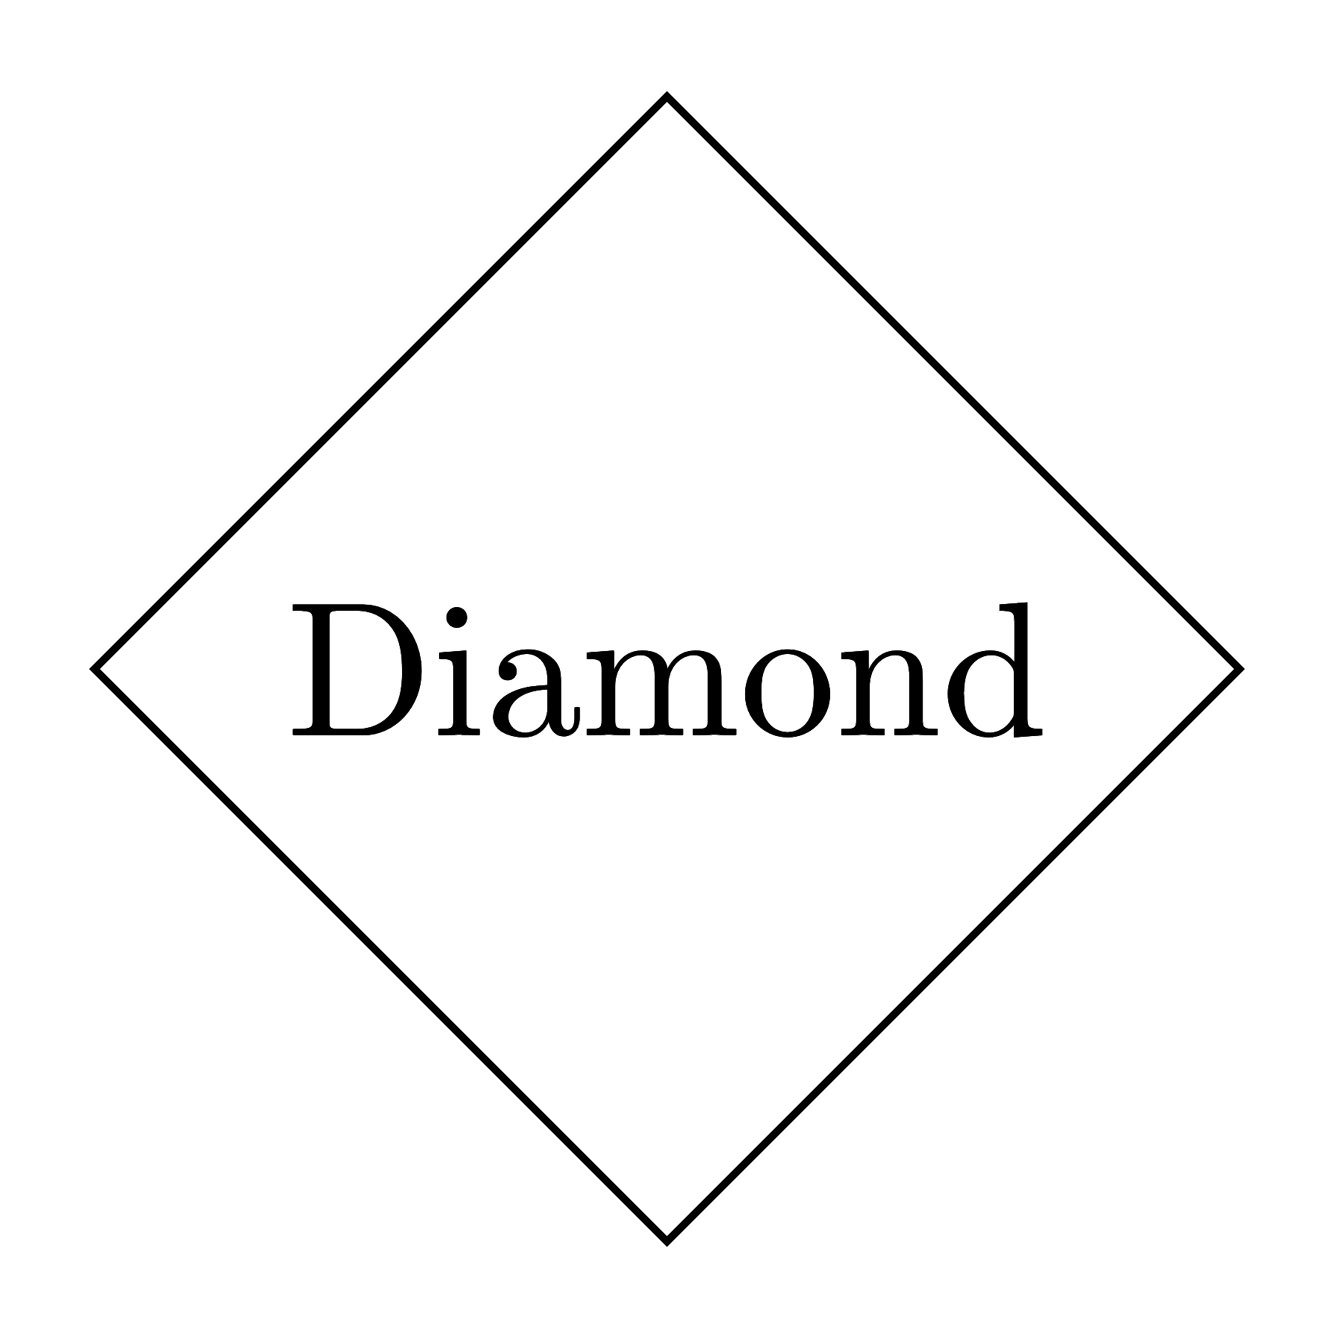 Add text content to Diamond shape in TikZ